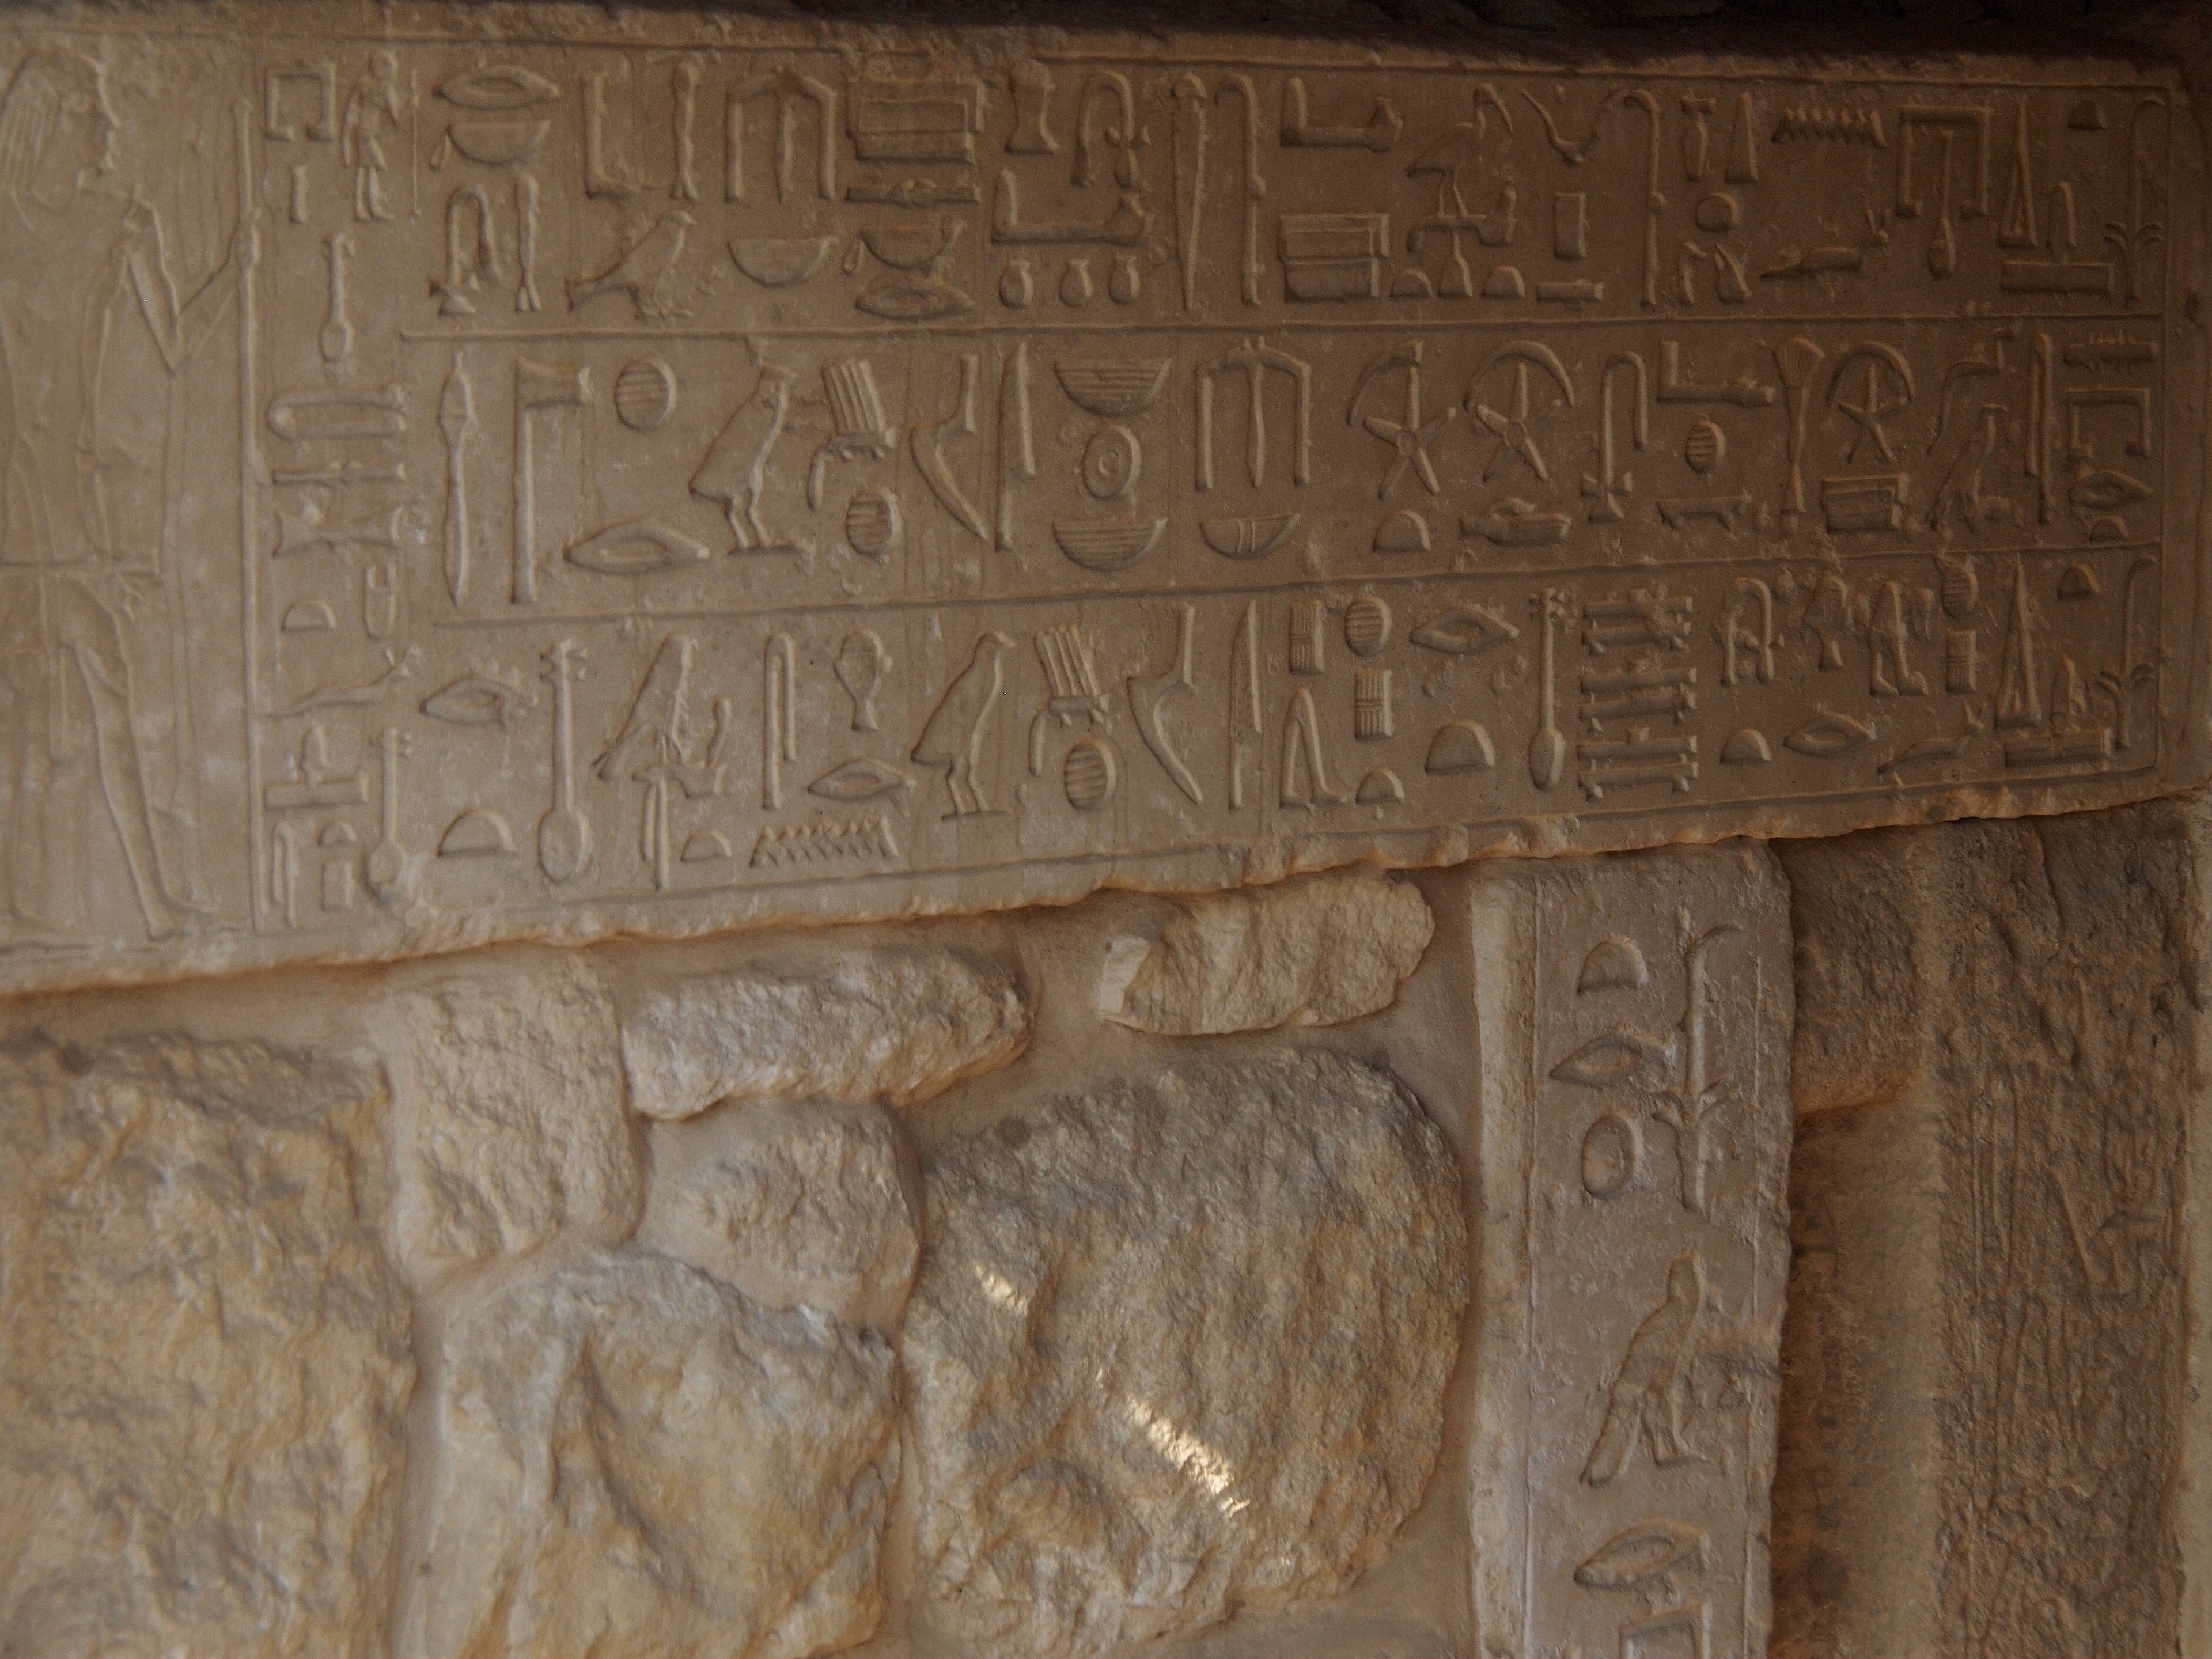 Man Made Hieroglyphics HD Wallpaper | Background Image